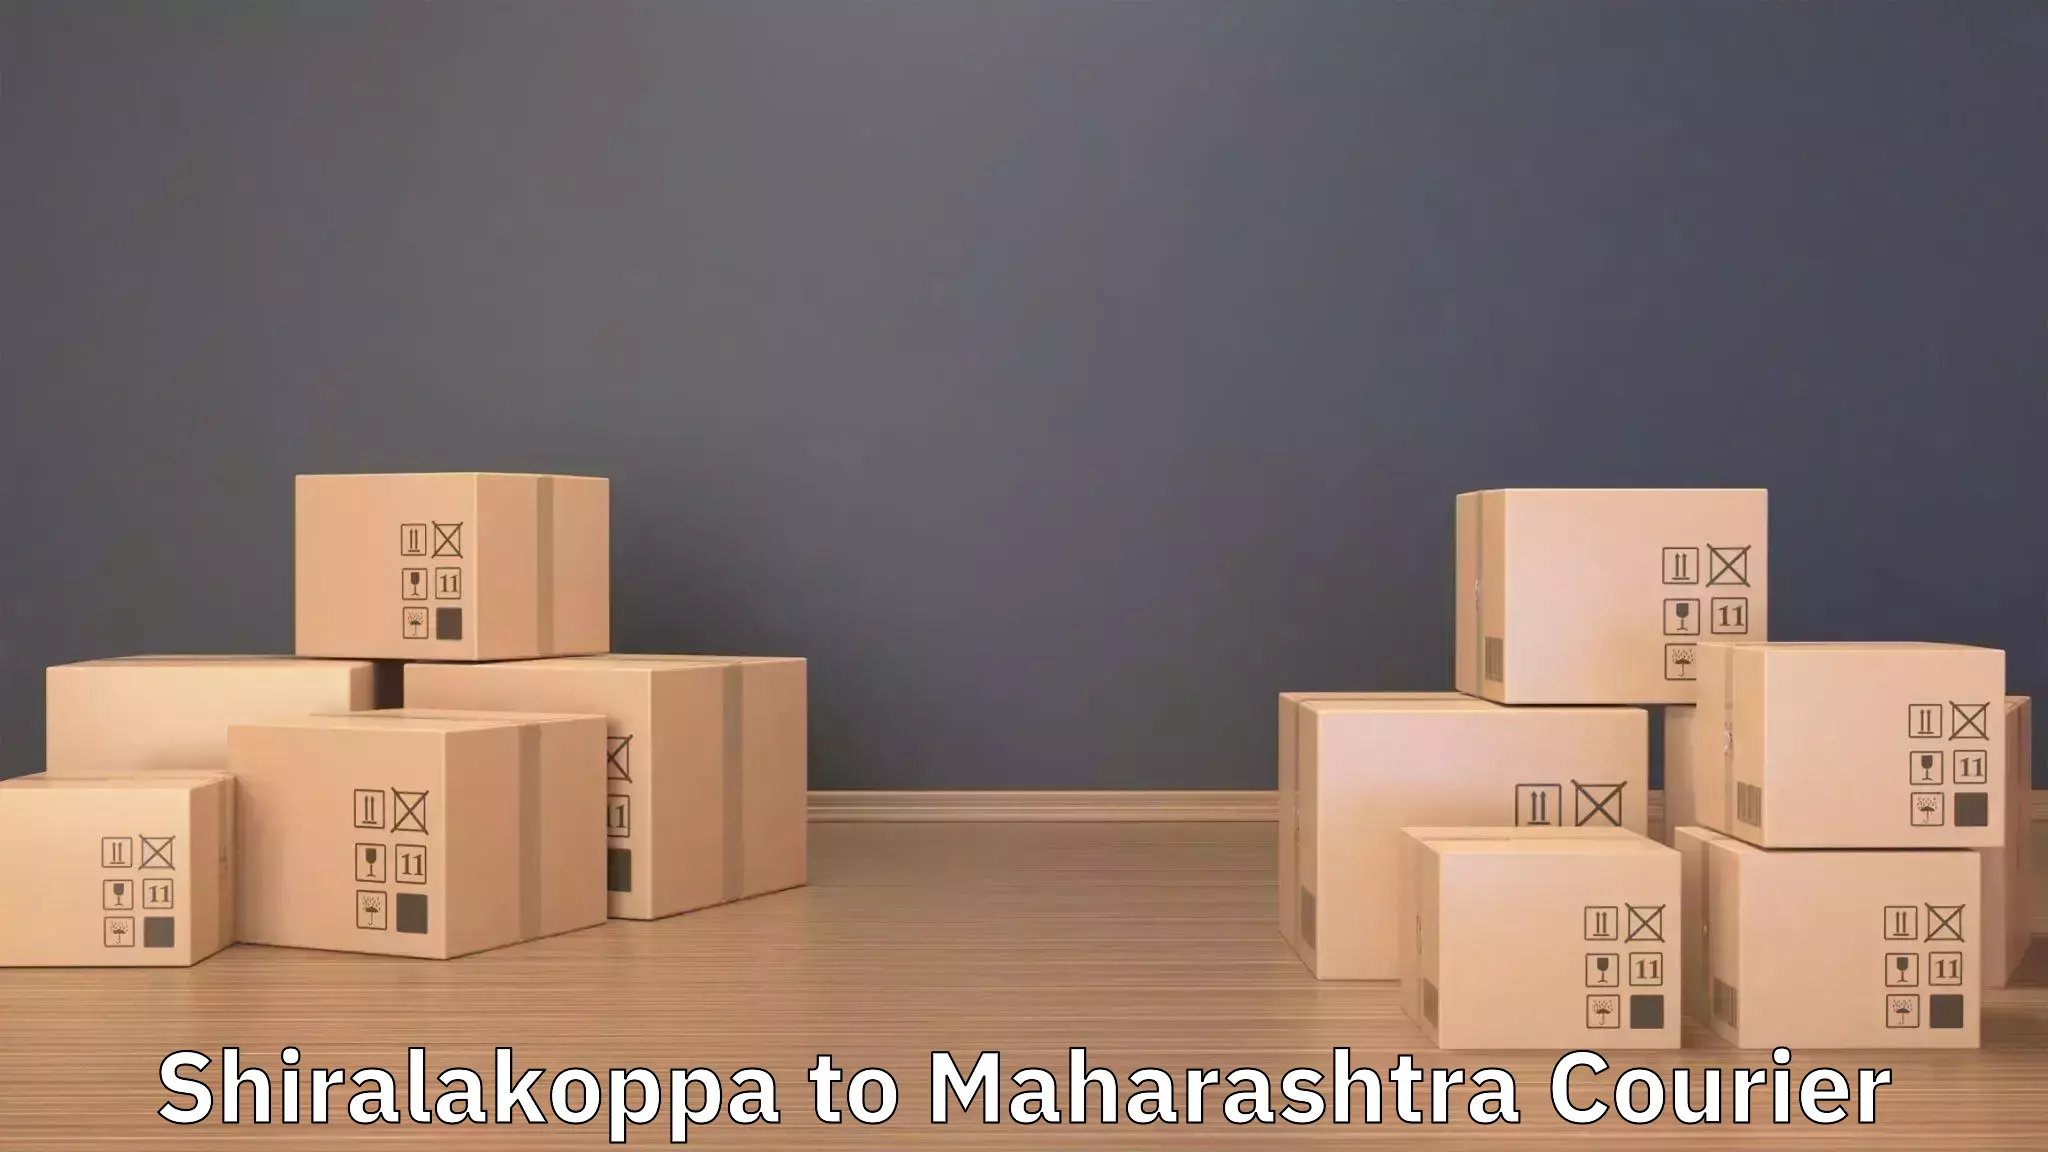 Moving service excellence Shiralakoppa to Navi Mumbai